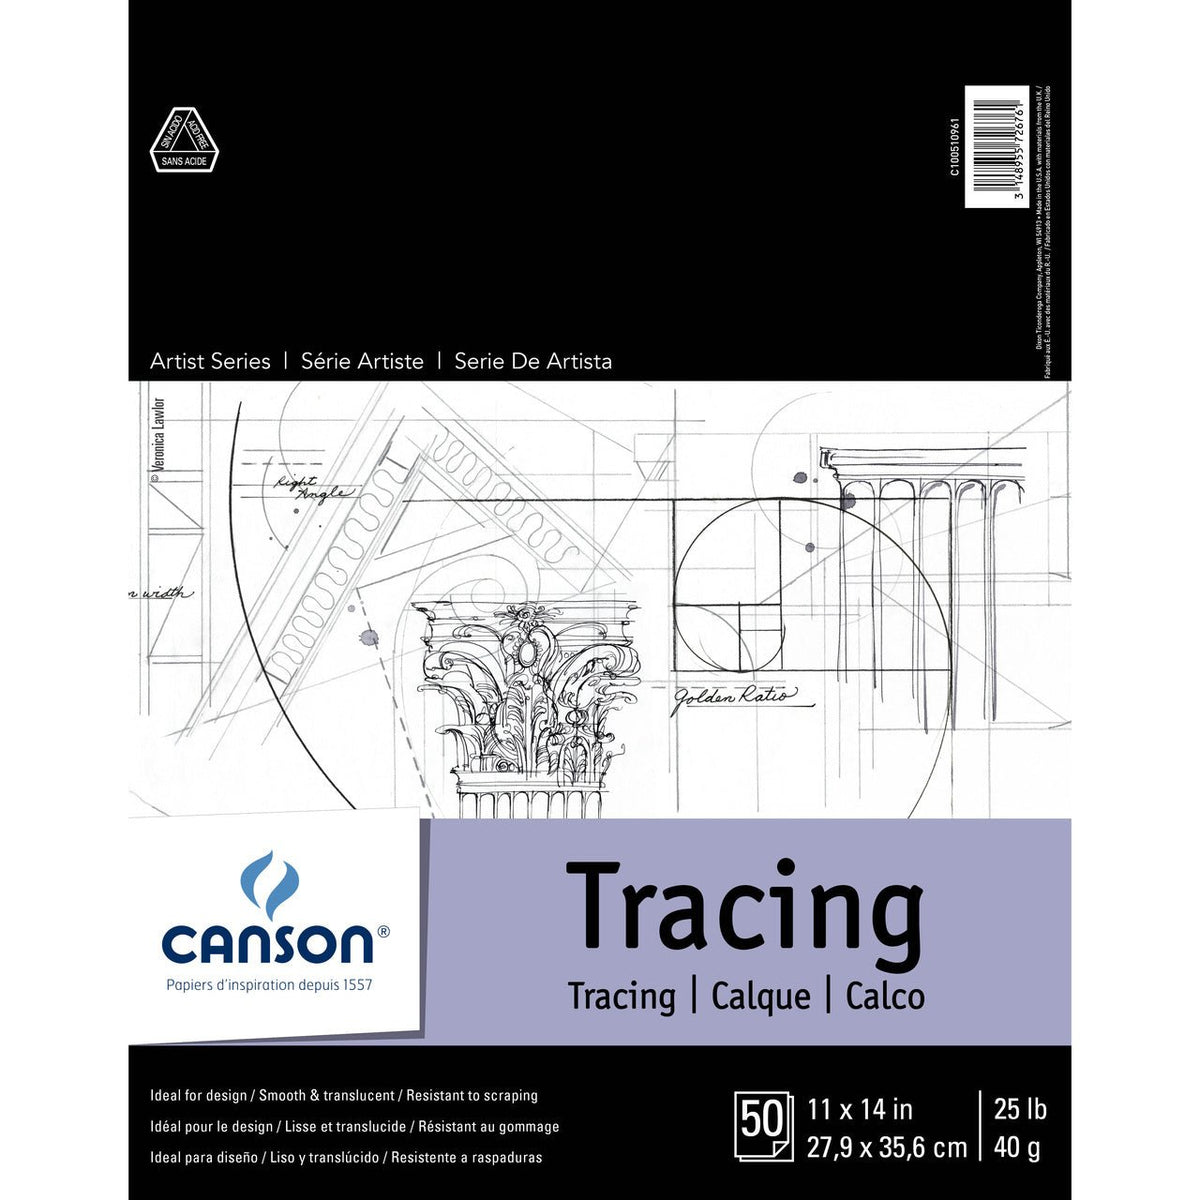 Canson Tracing Pad 25 lb - 50 Sheets 11X14 - merriartist.com